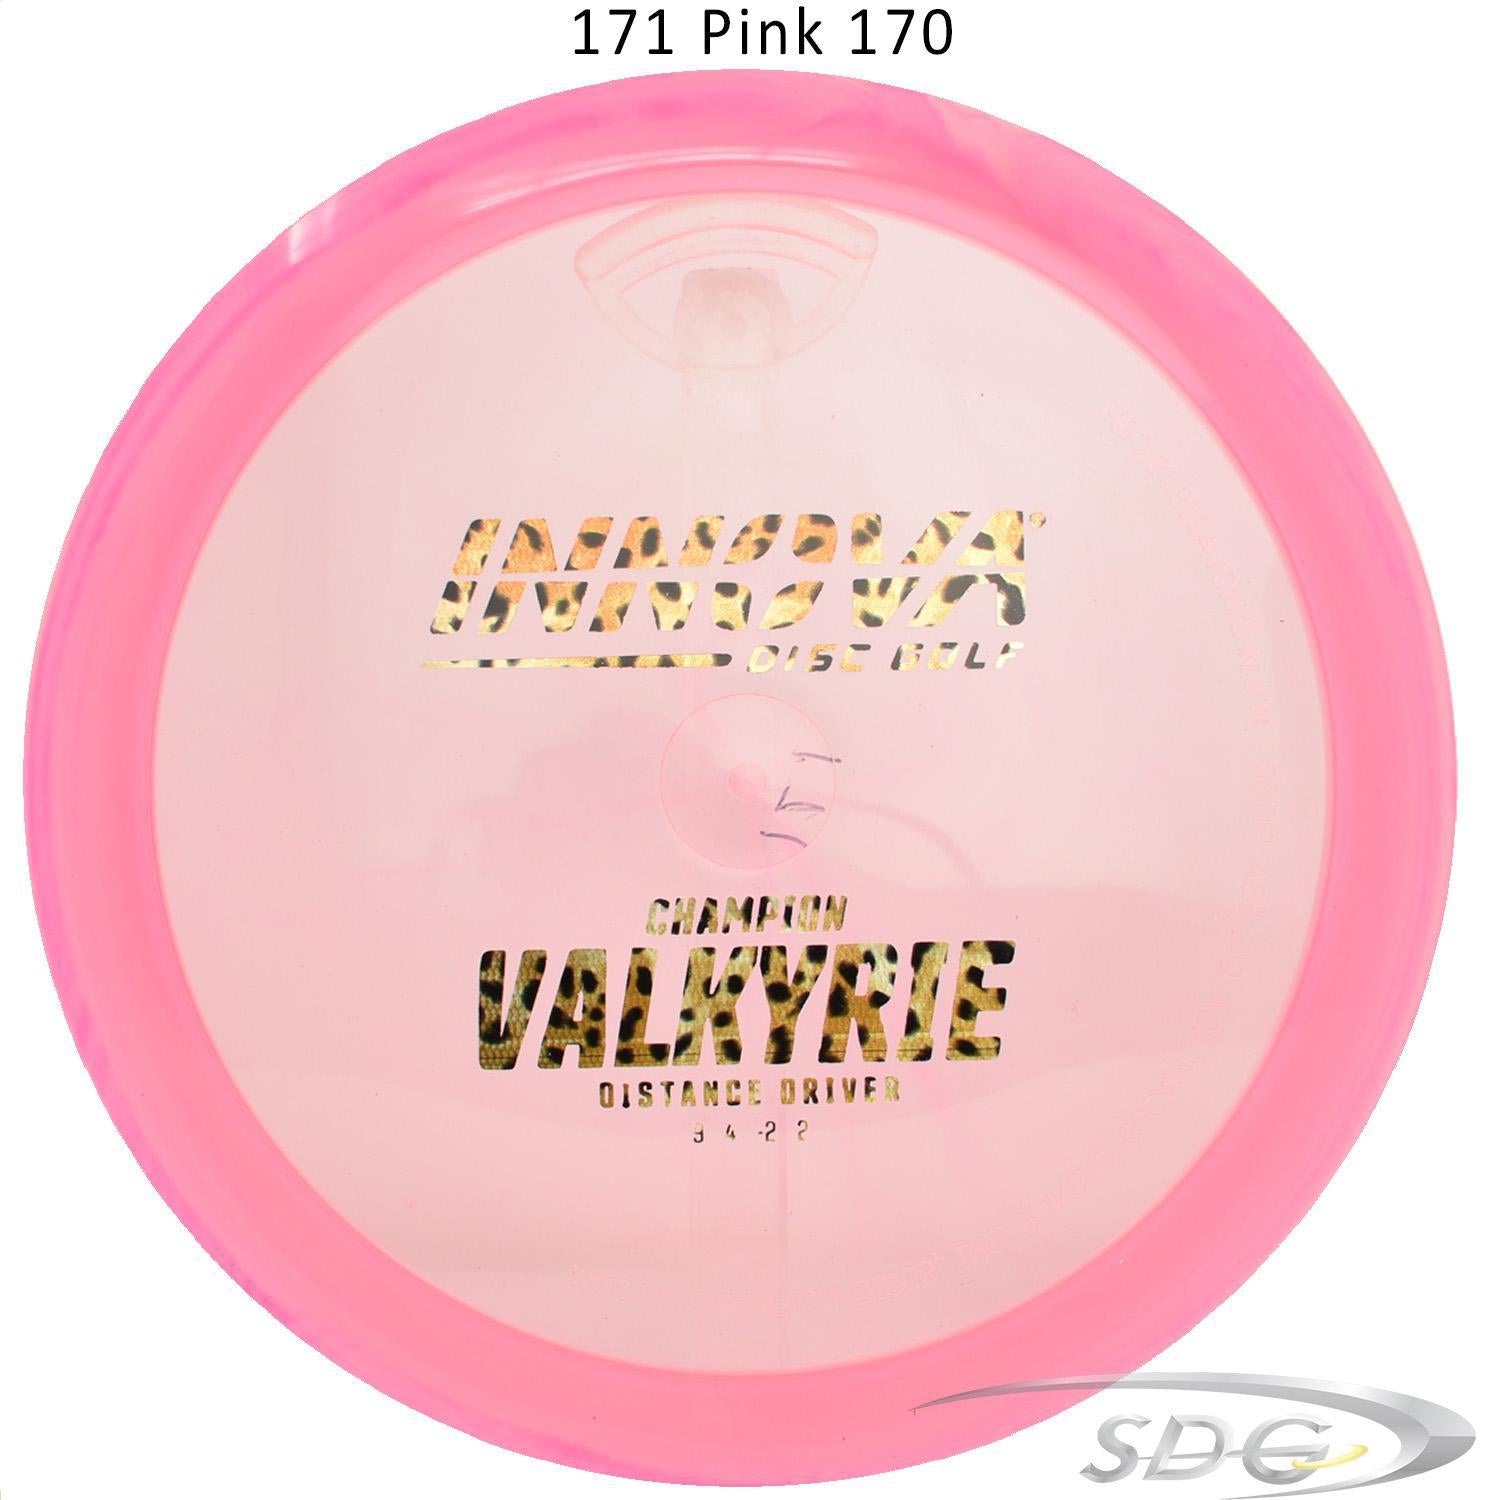 innova-champion-valkyrie-disc-golf-distance-driver 171 Pink 170 